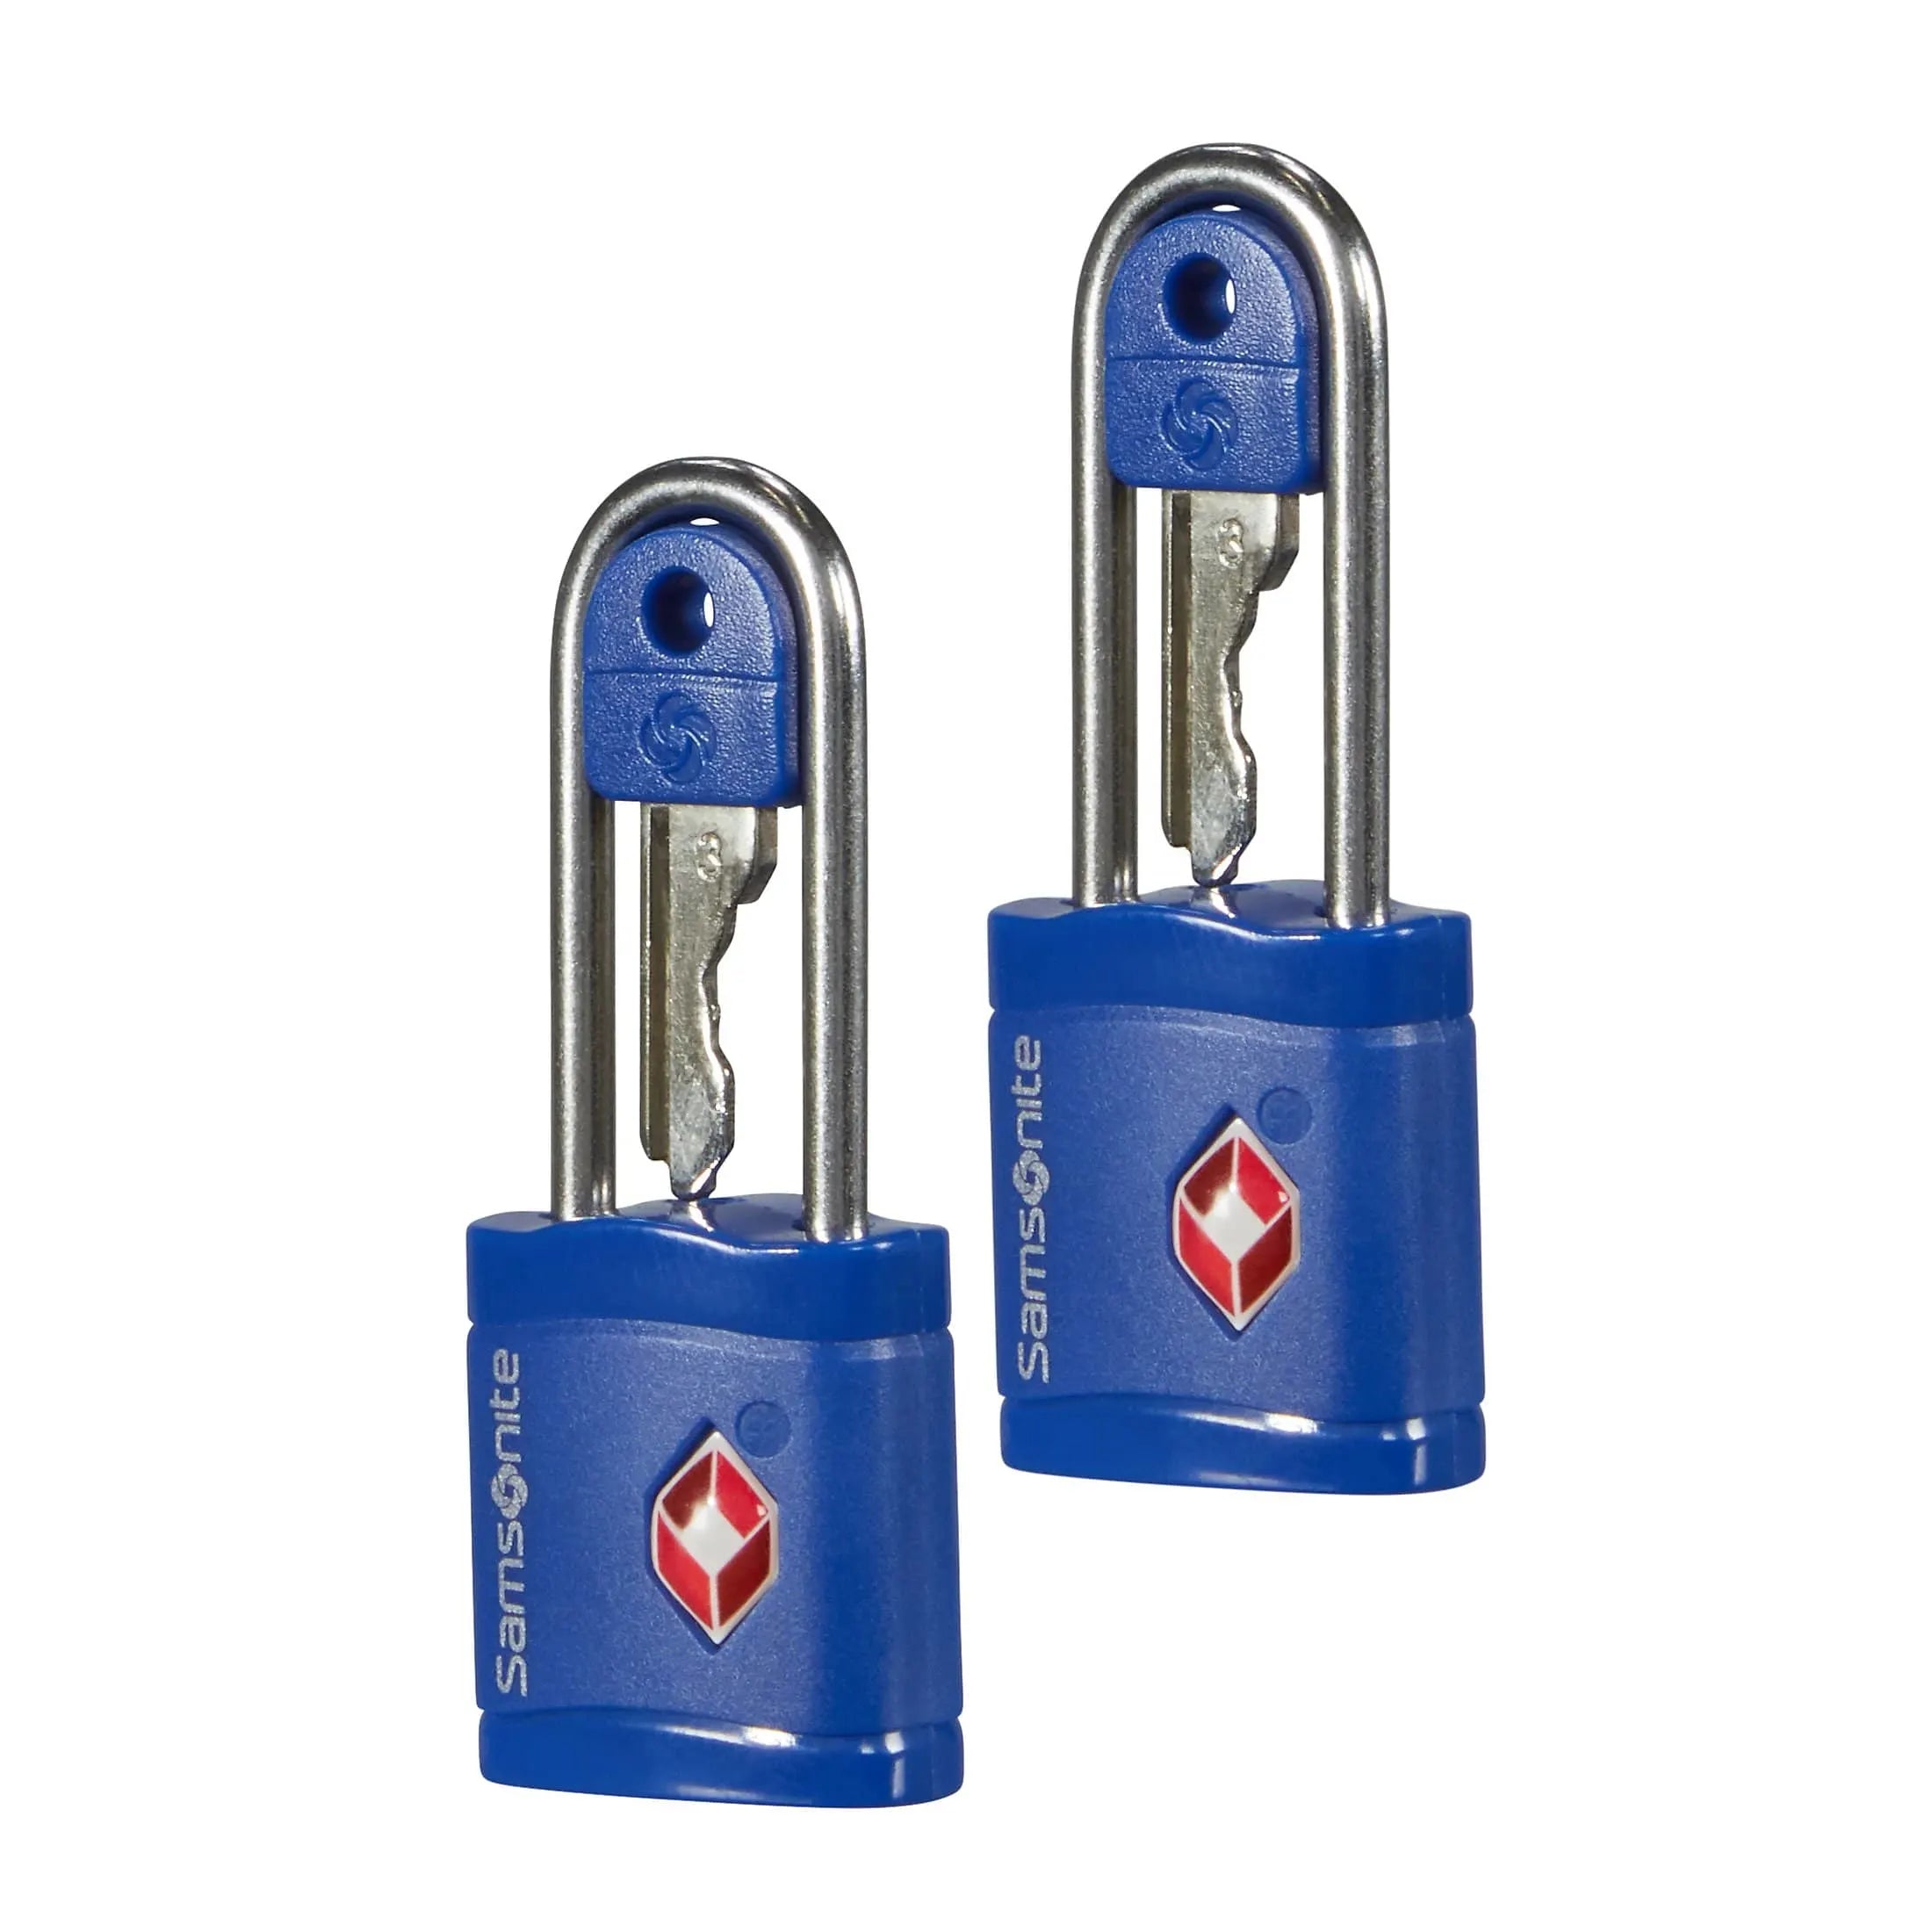 Samsonite Travel Accessories TSA lock set - midnight blue